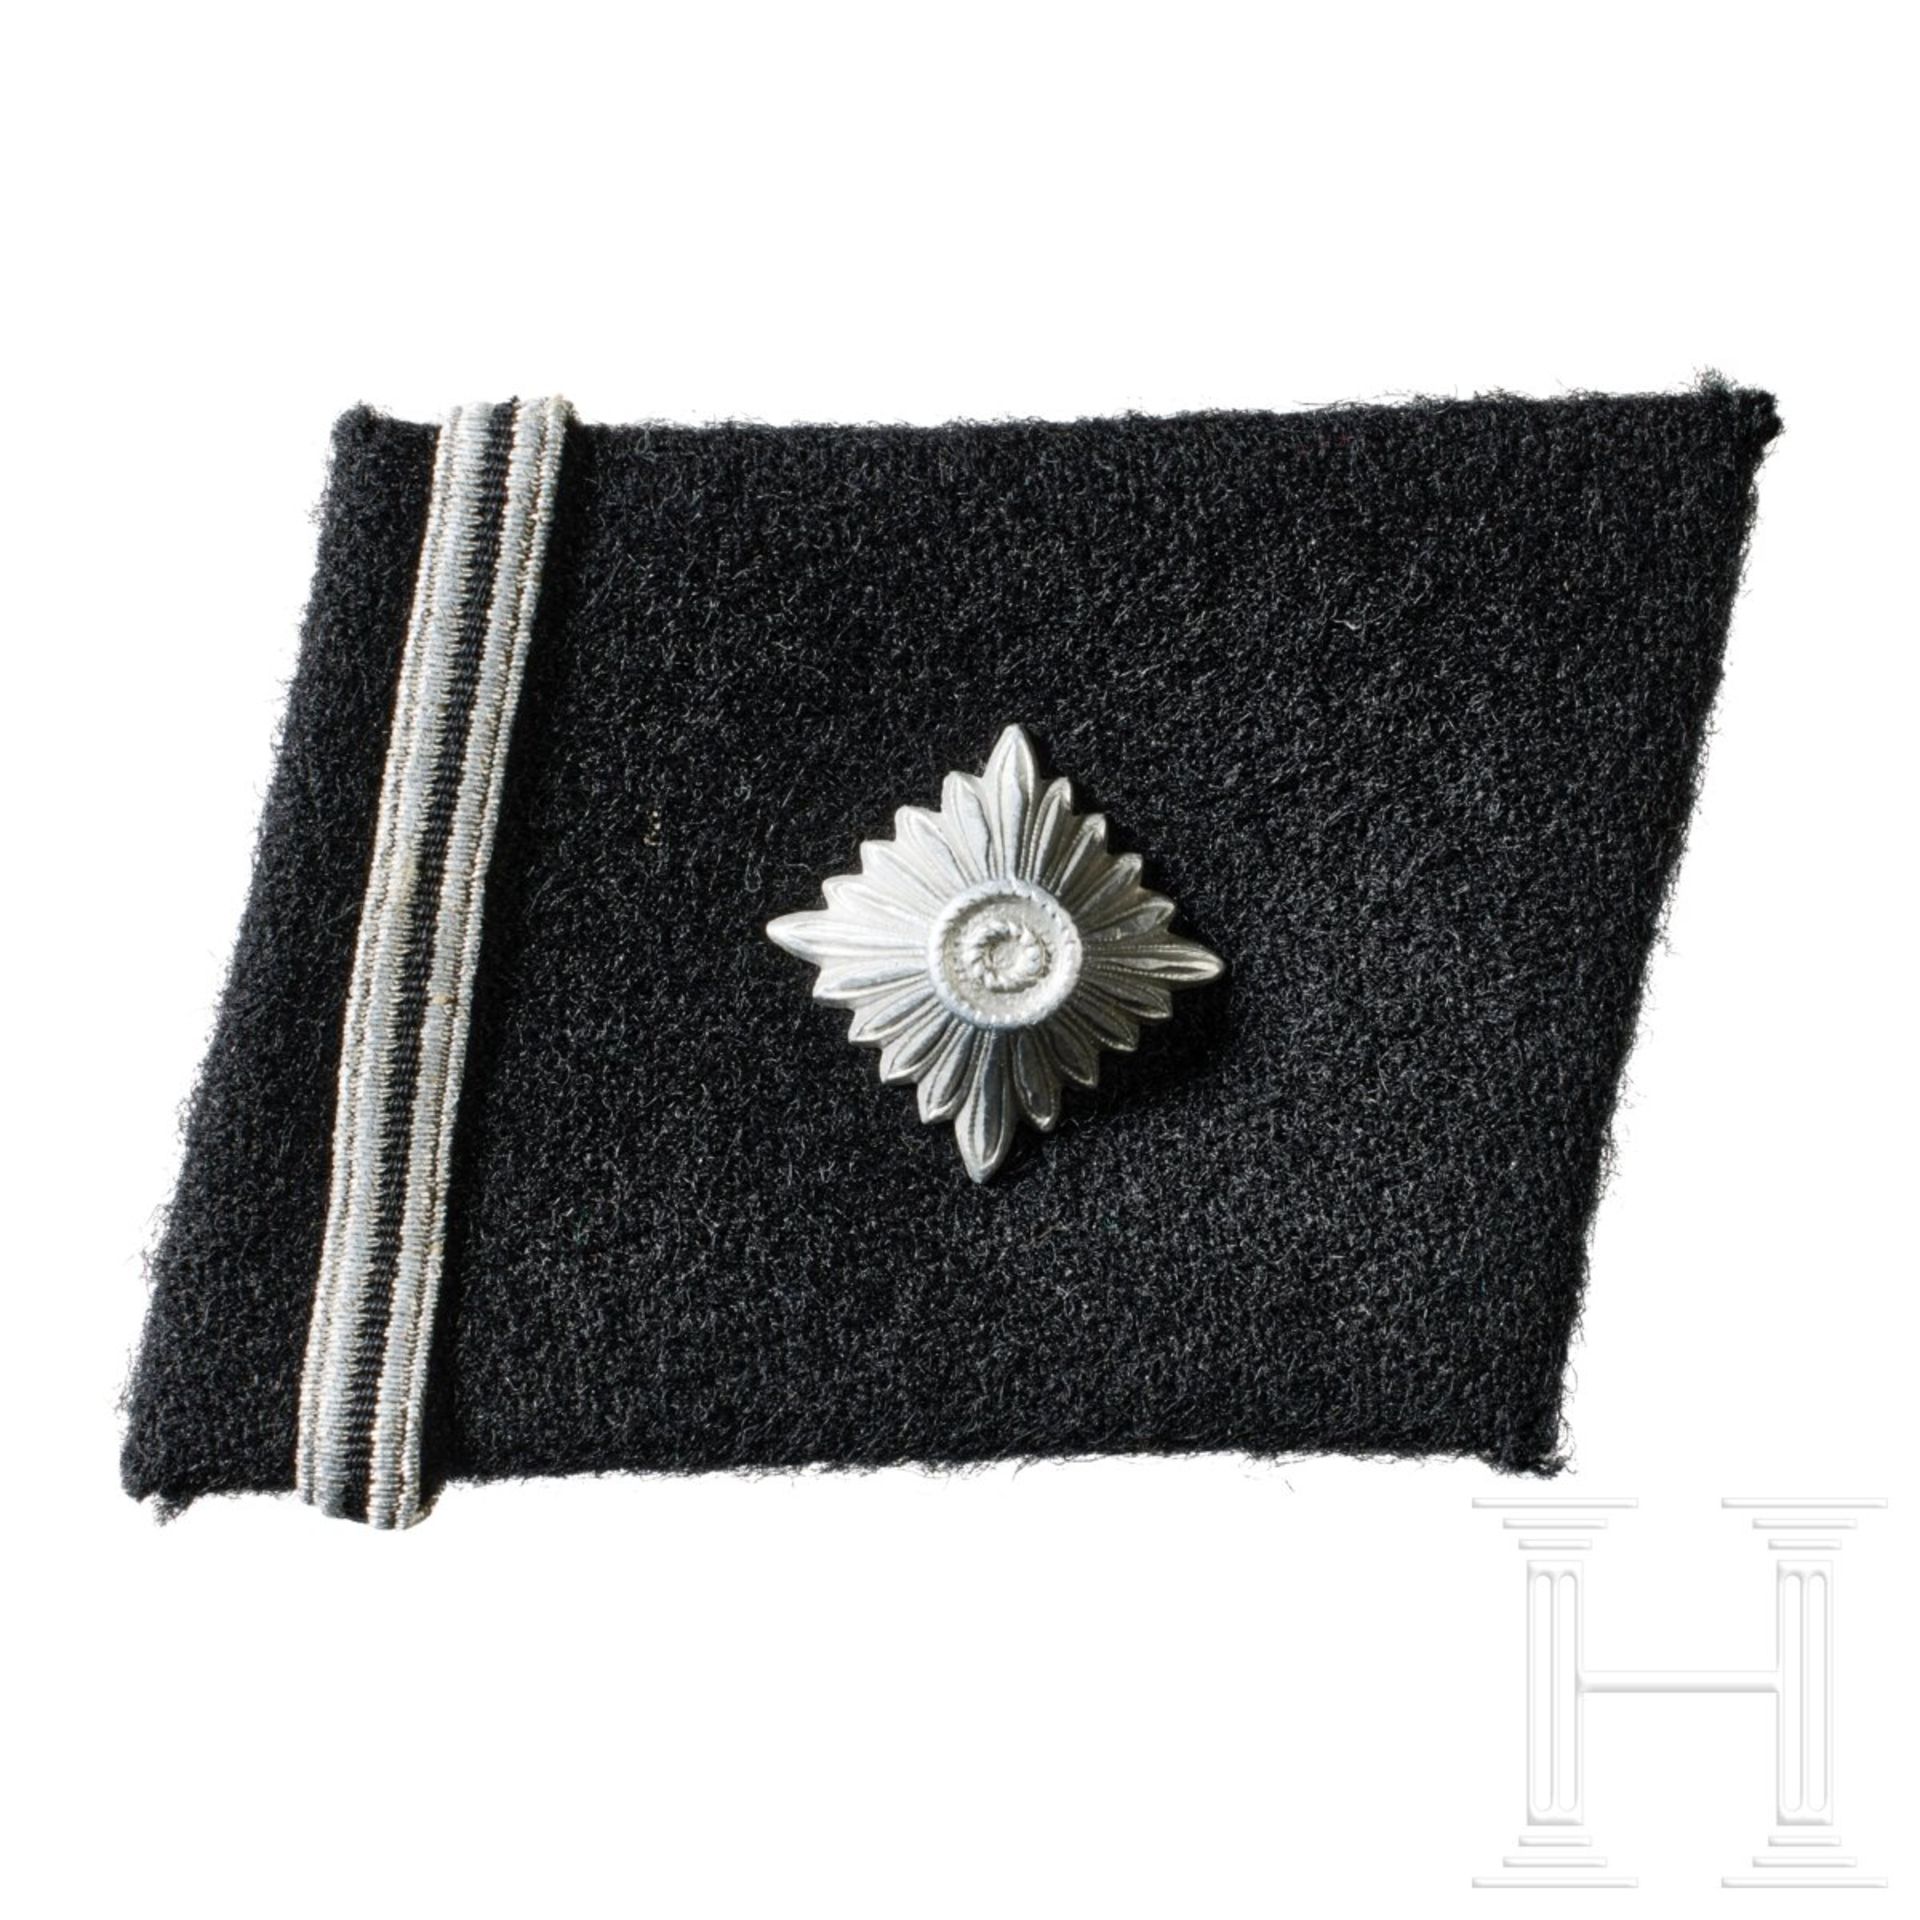 A Left Collar Tab for SS-Scharführer 